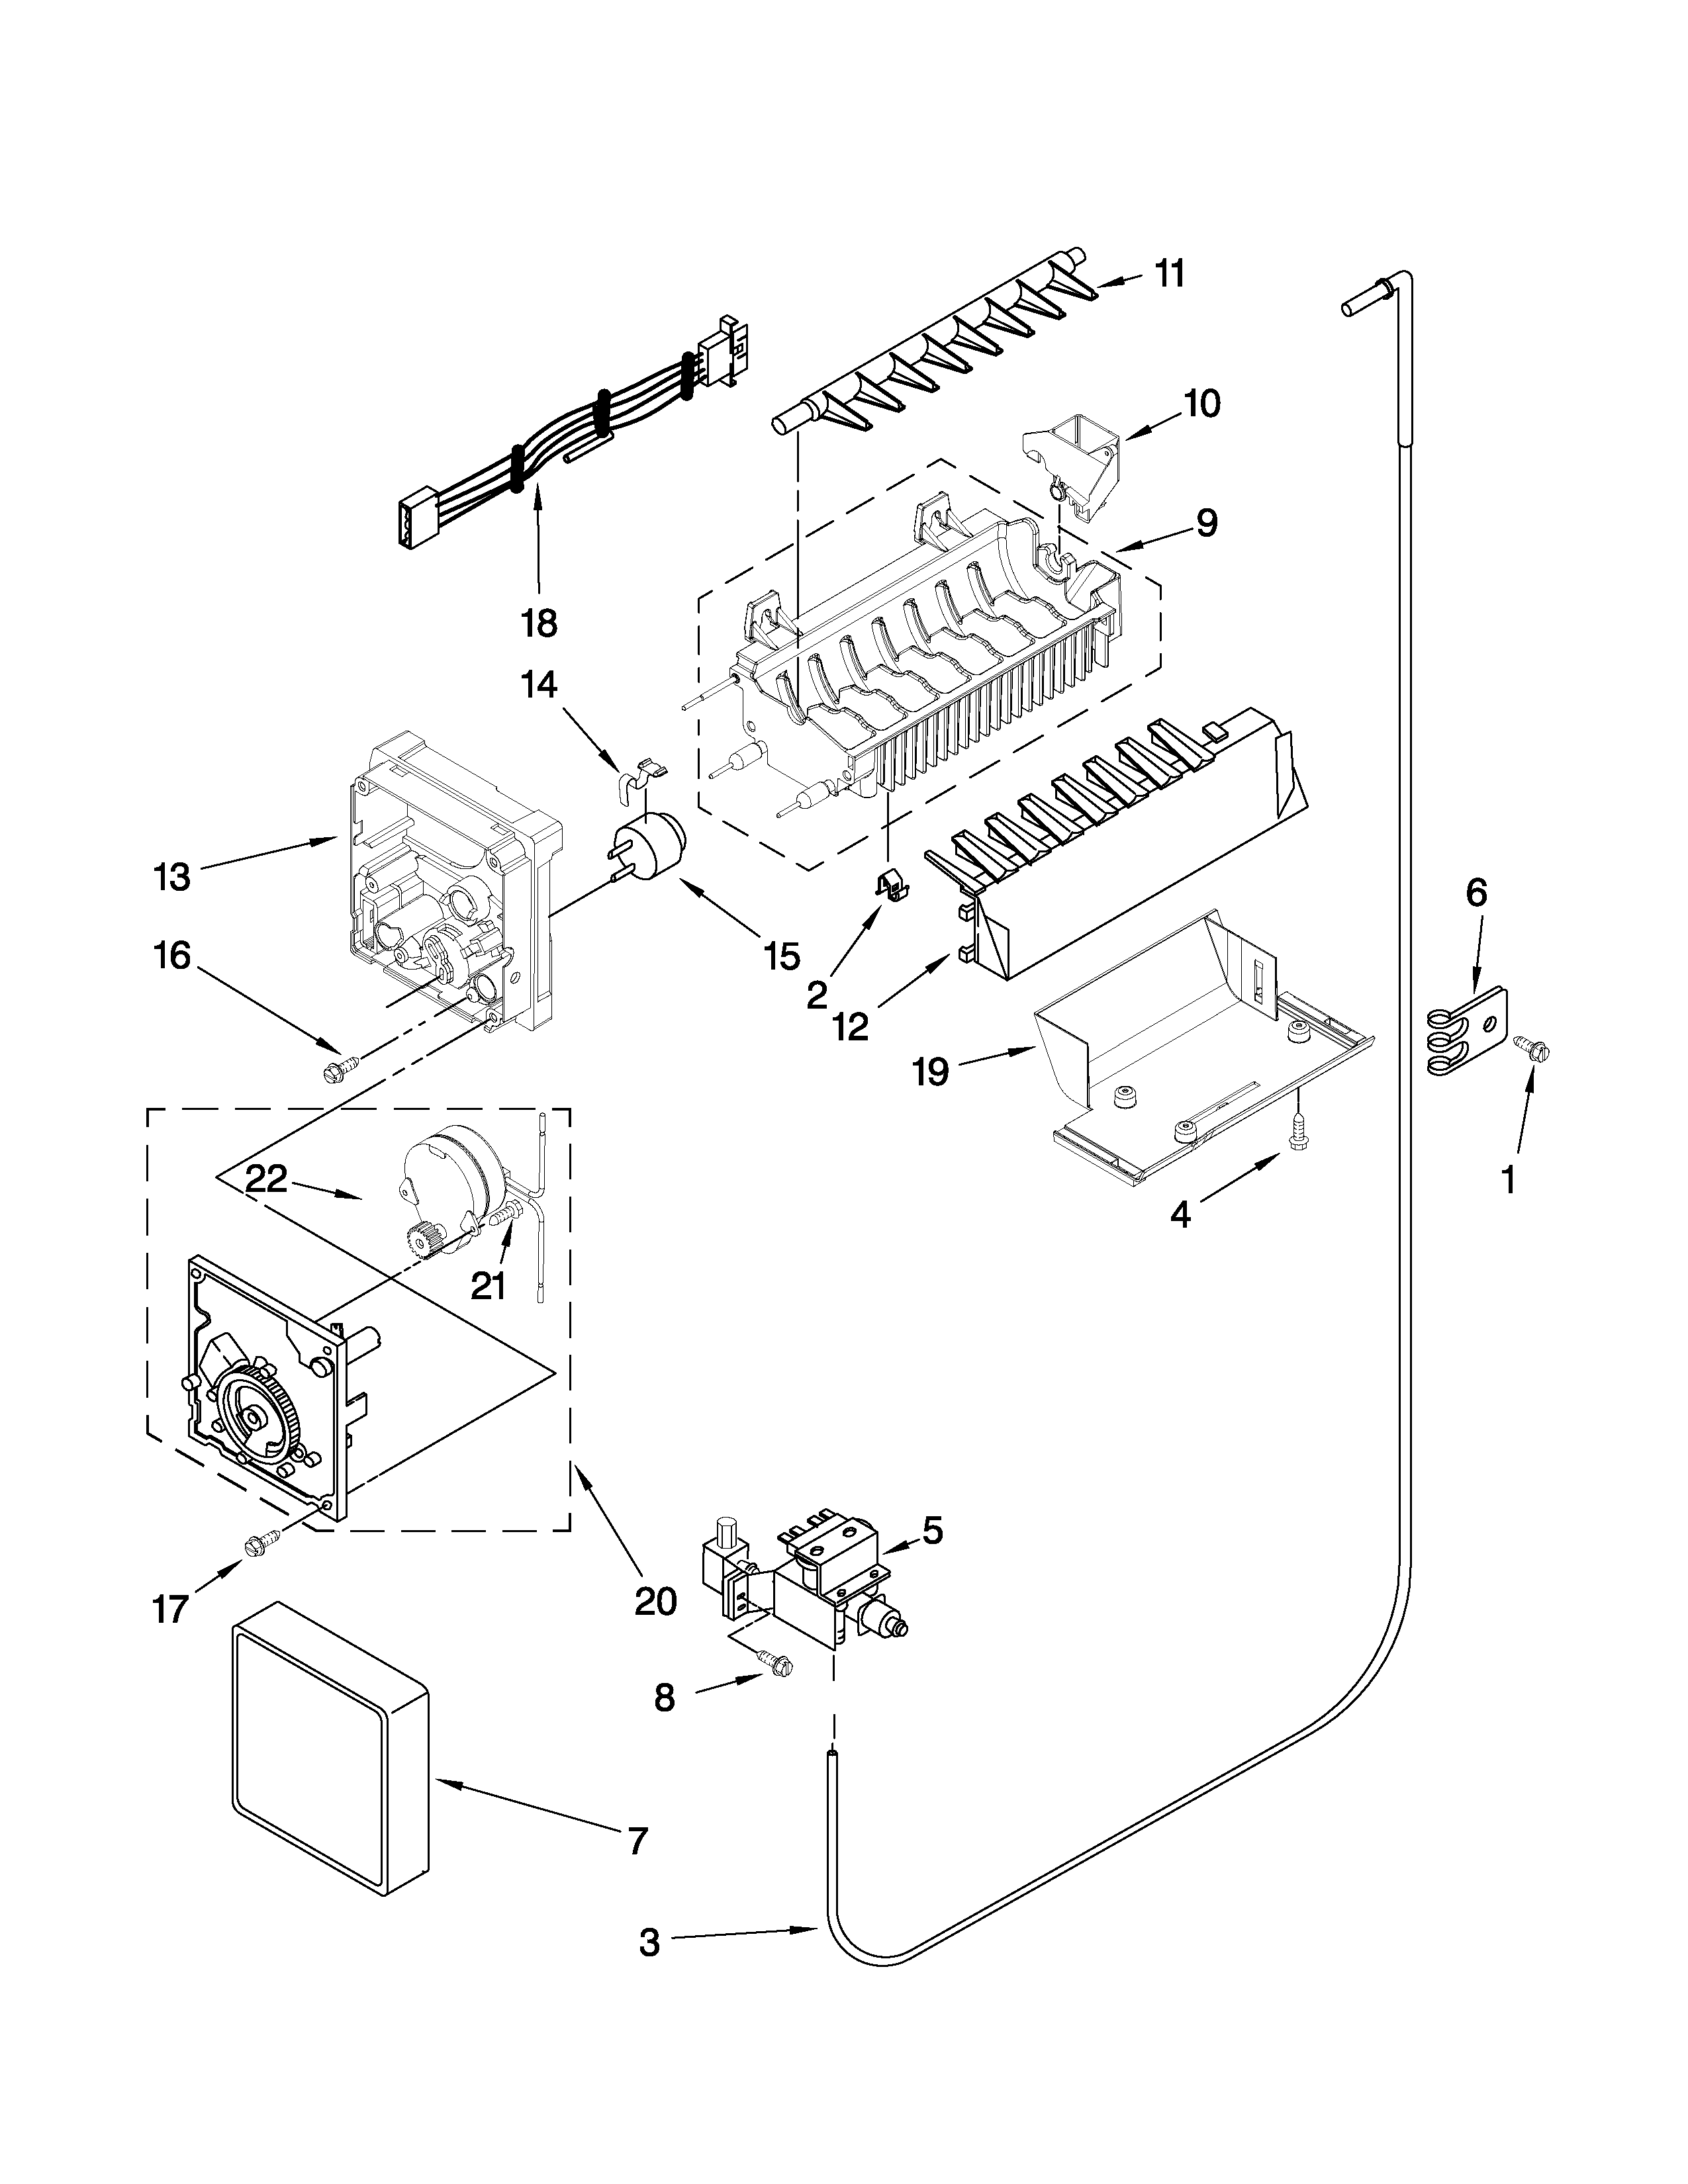 27 Whirlpool Freezer Parts Diagram